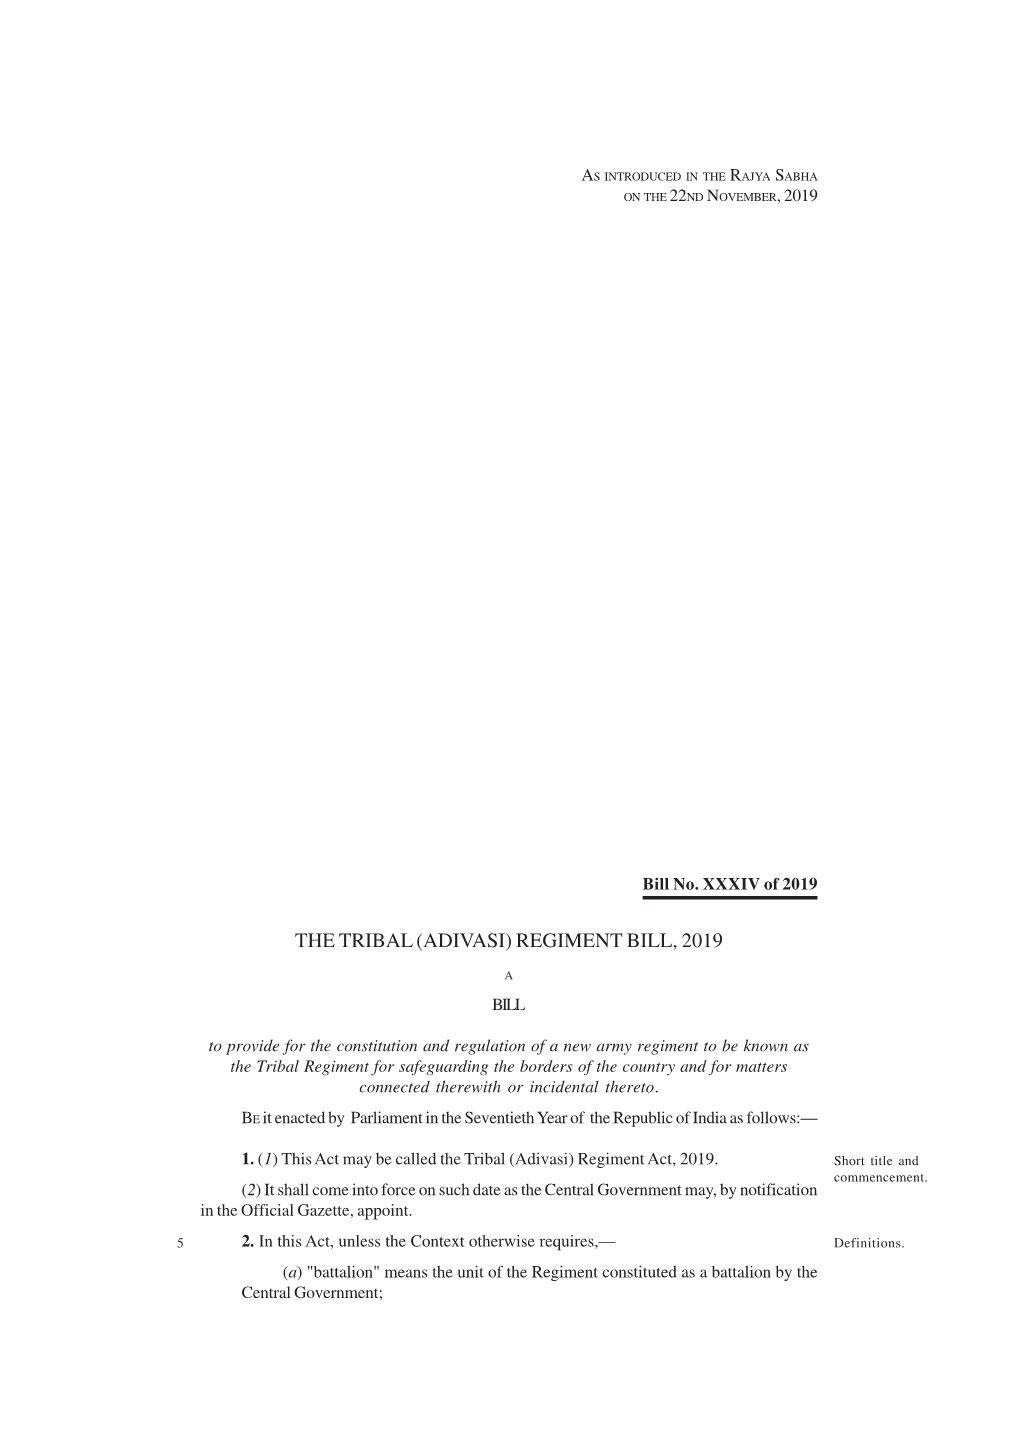 The Tribal (Adivasi) Regiment Bill, 2019